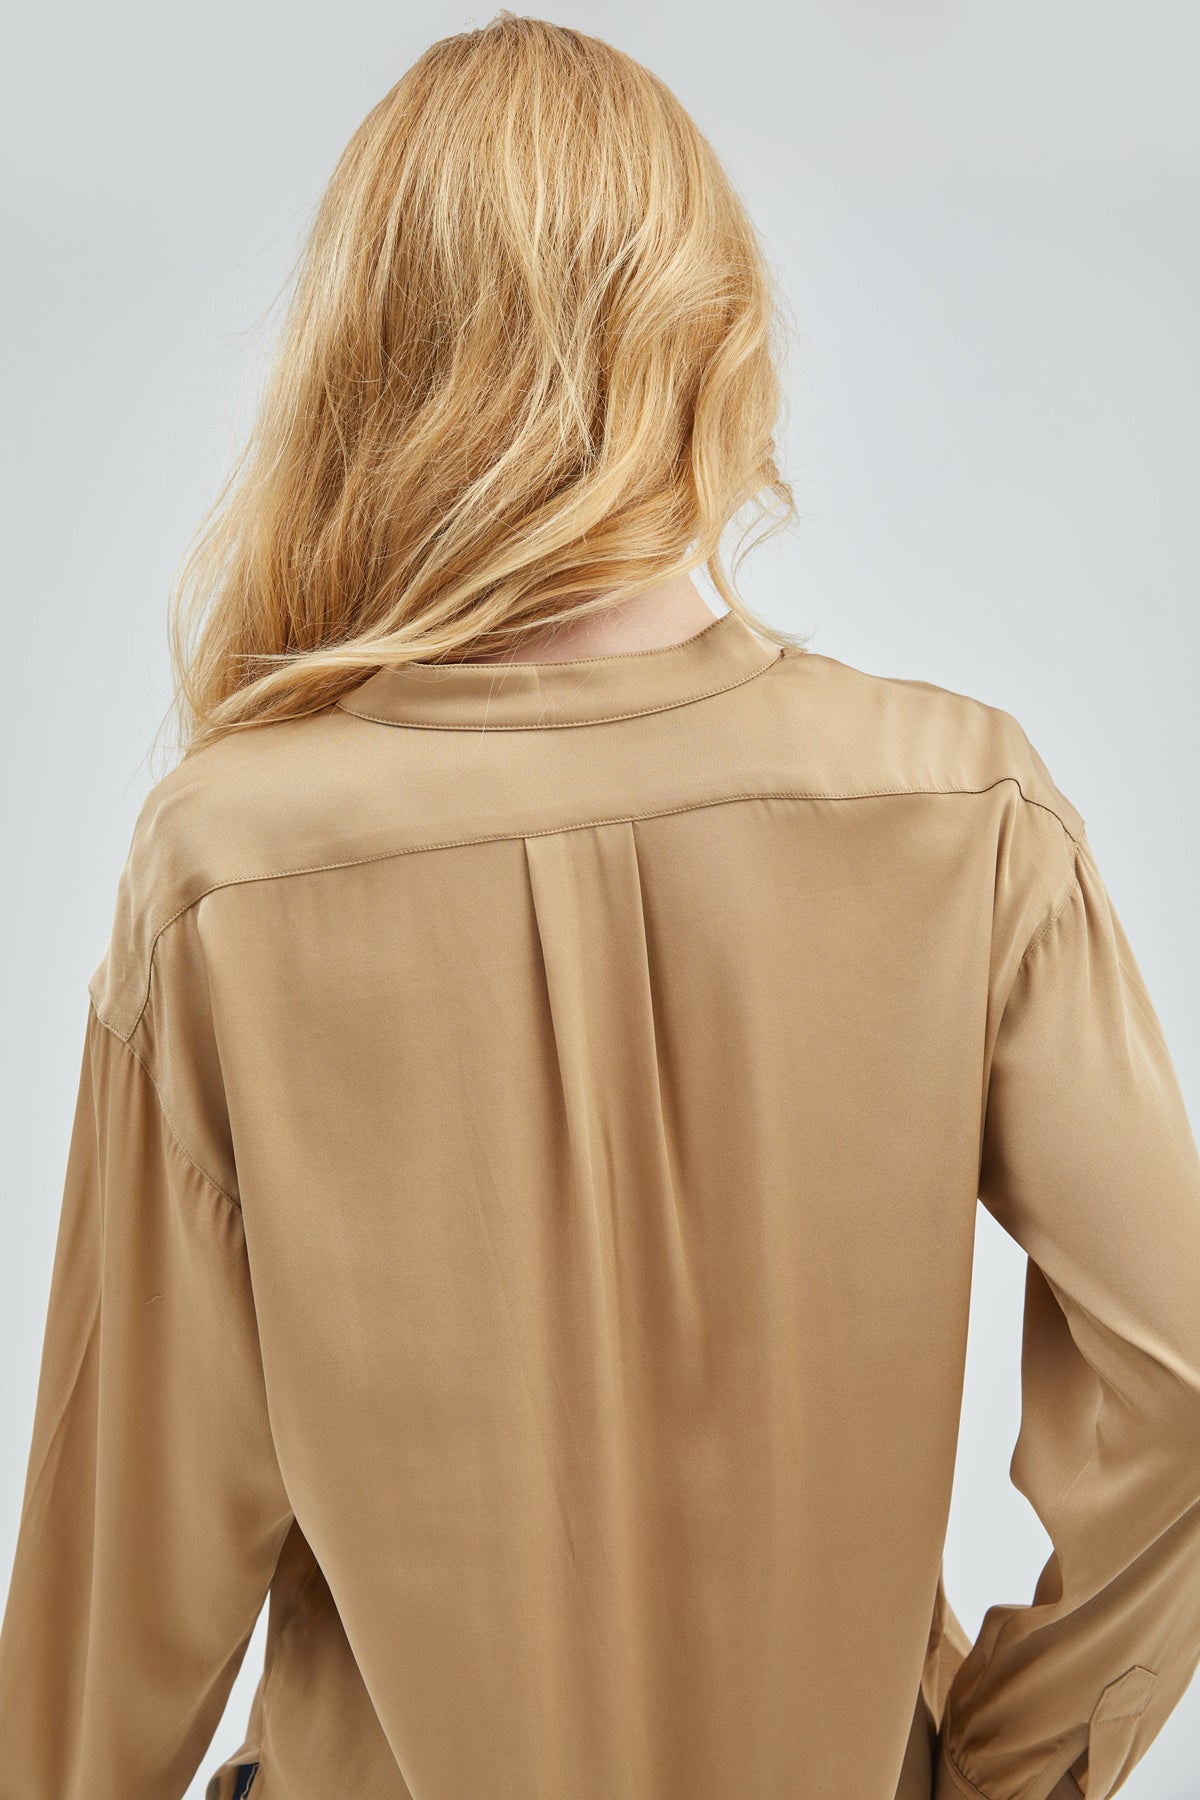 GRALACE V Neck Shirts Long Sleeve Silk Blouse